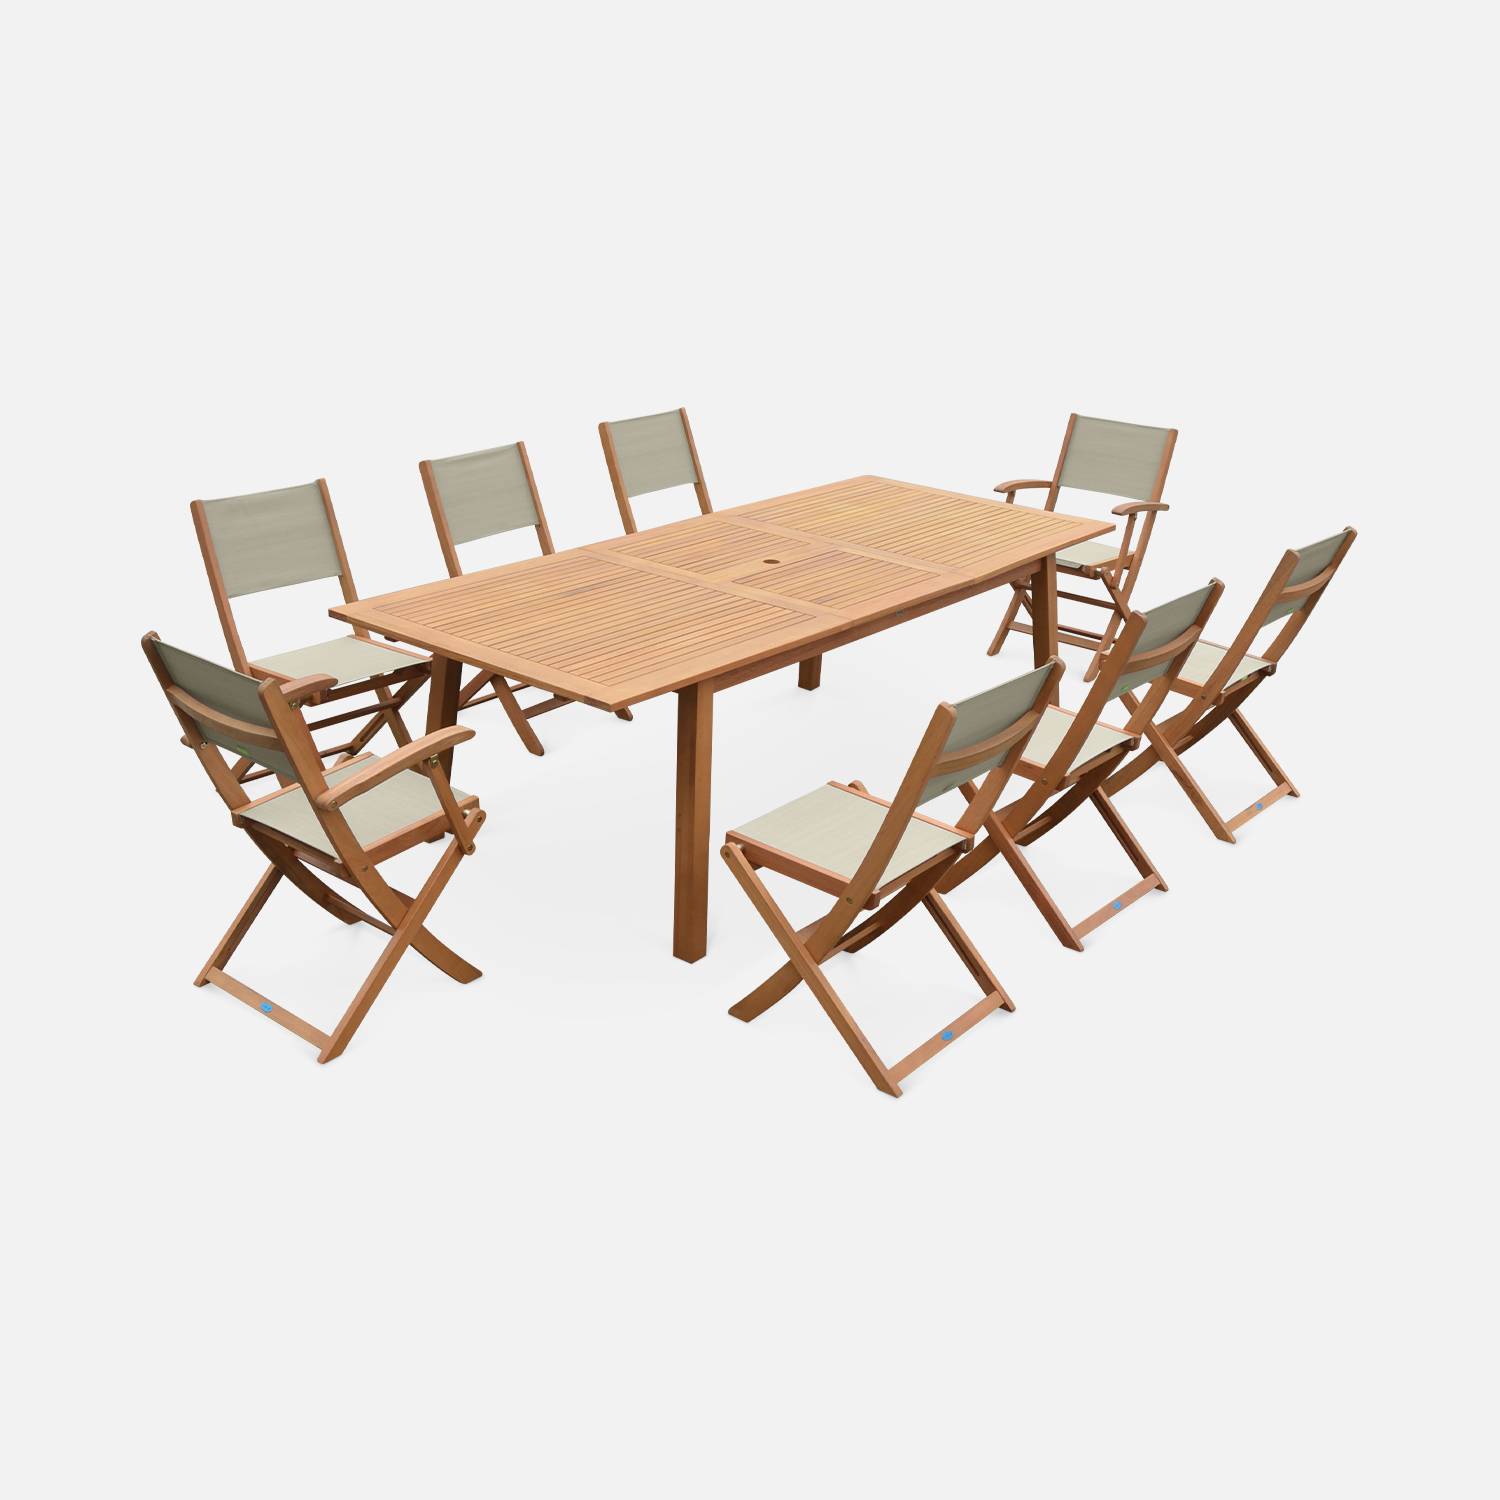 8-seater garden dining set, extendable 180-240cm FSC-eucalyptus wooden table, 6 chairs and 2 armchairs - Almeria 8 - Grey textilene seats Photo3